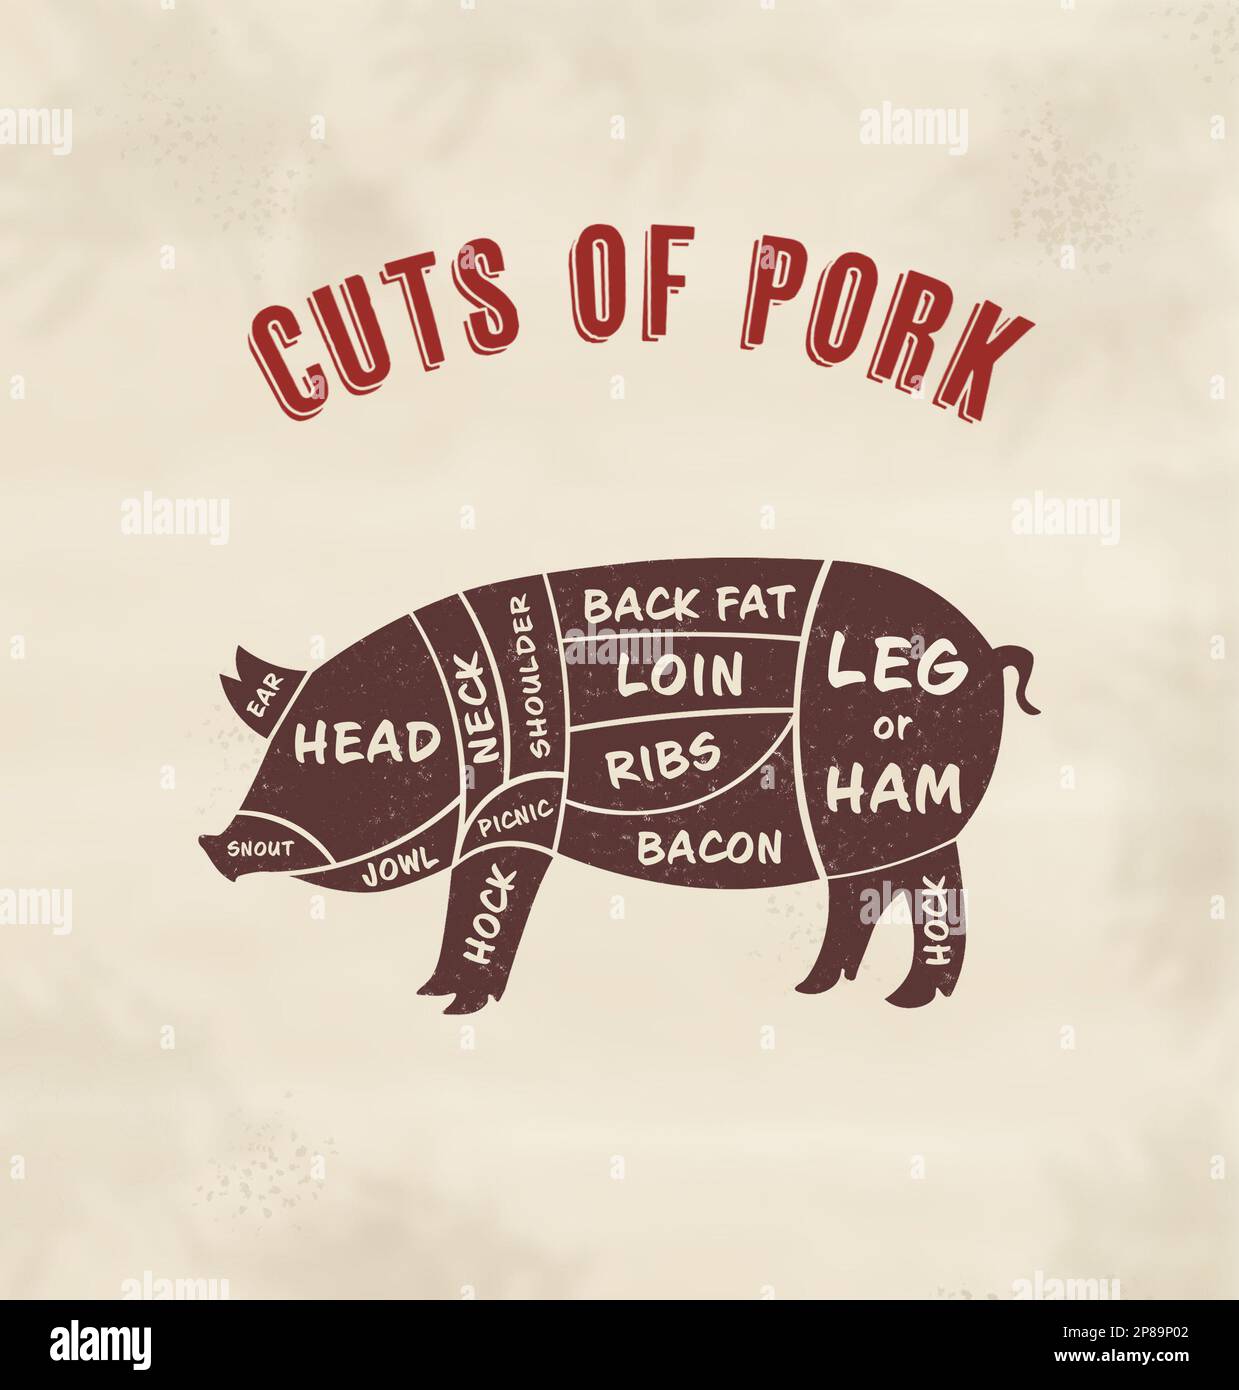 Butcher's guide: Cuts of pork scheme. Illustration of pig on beige background Stock Photo